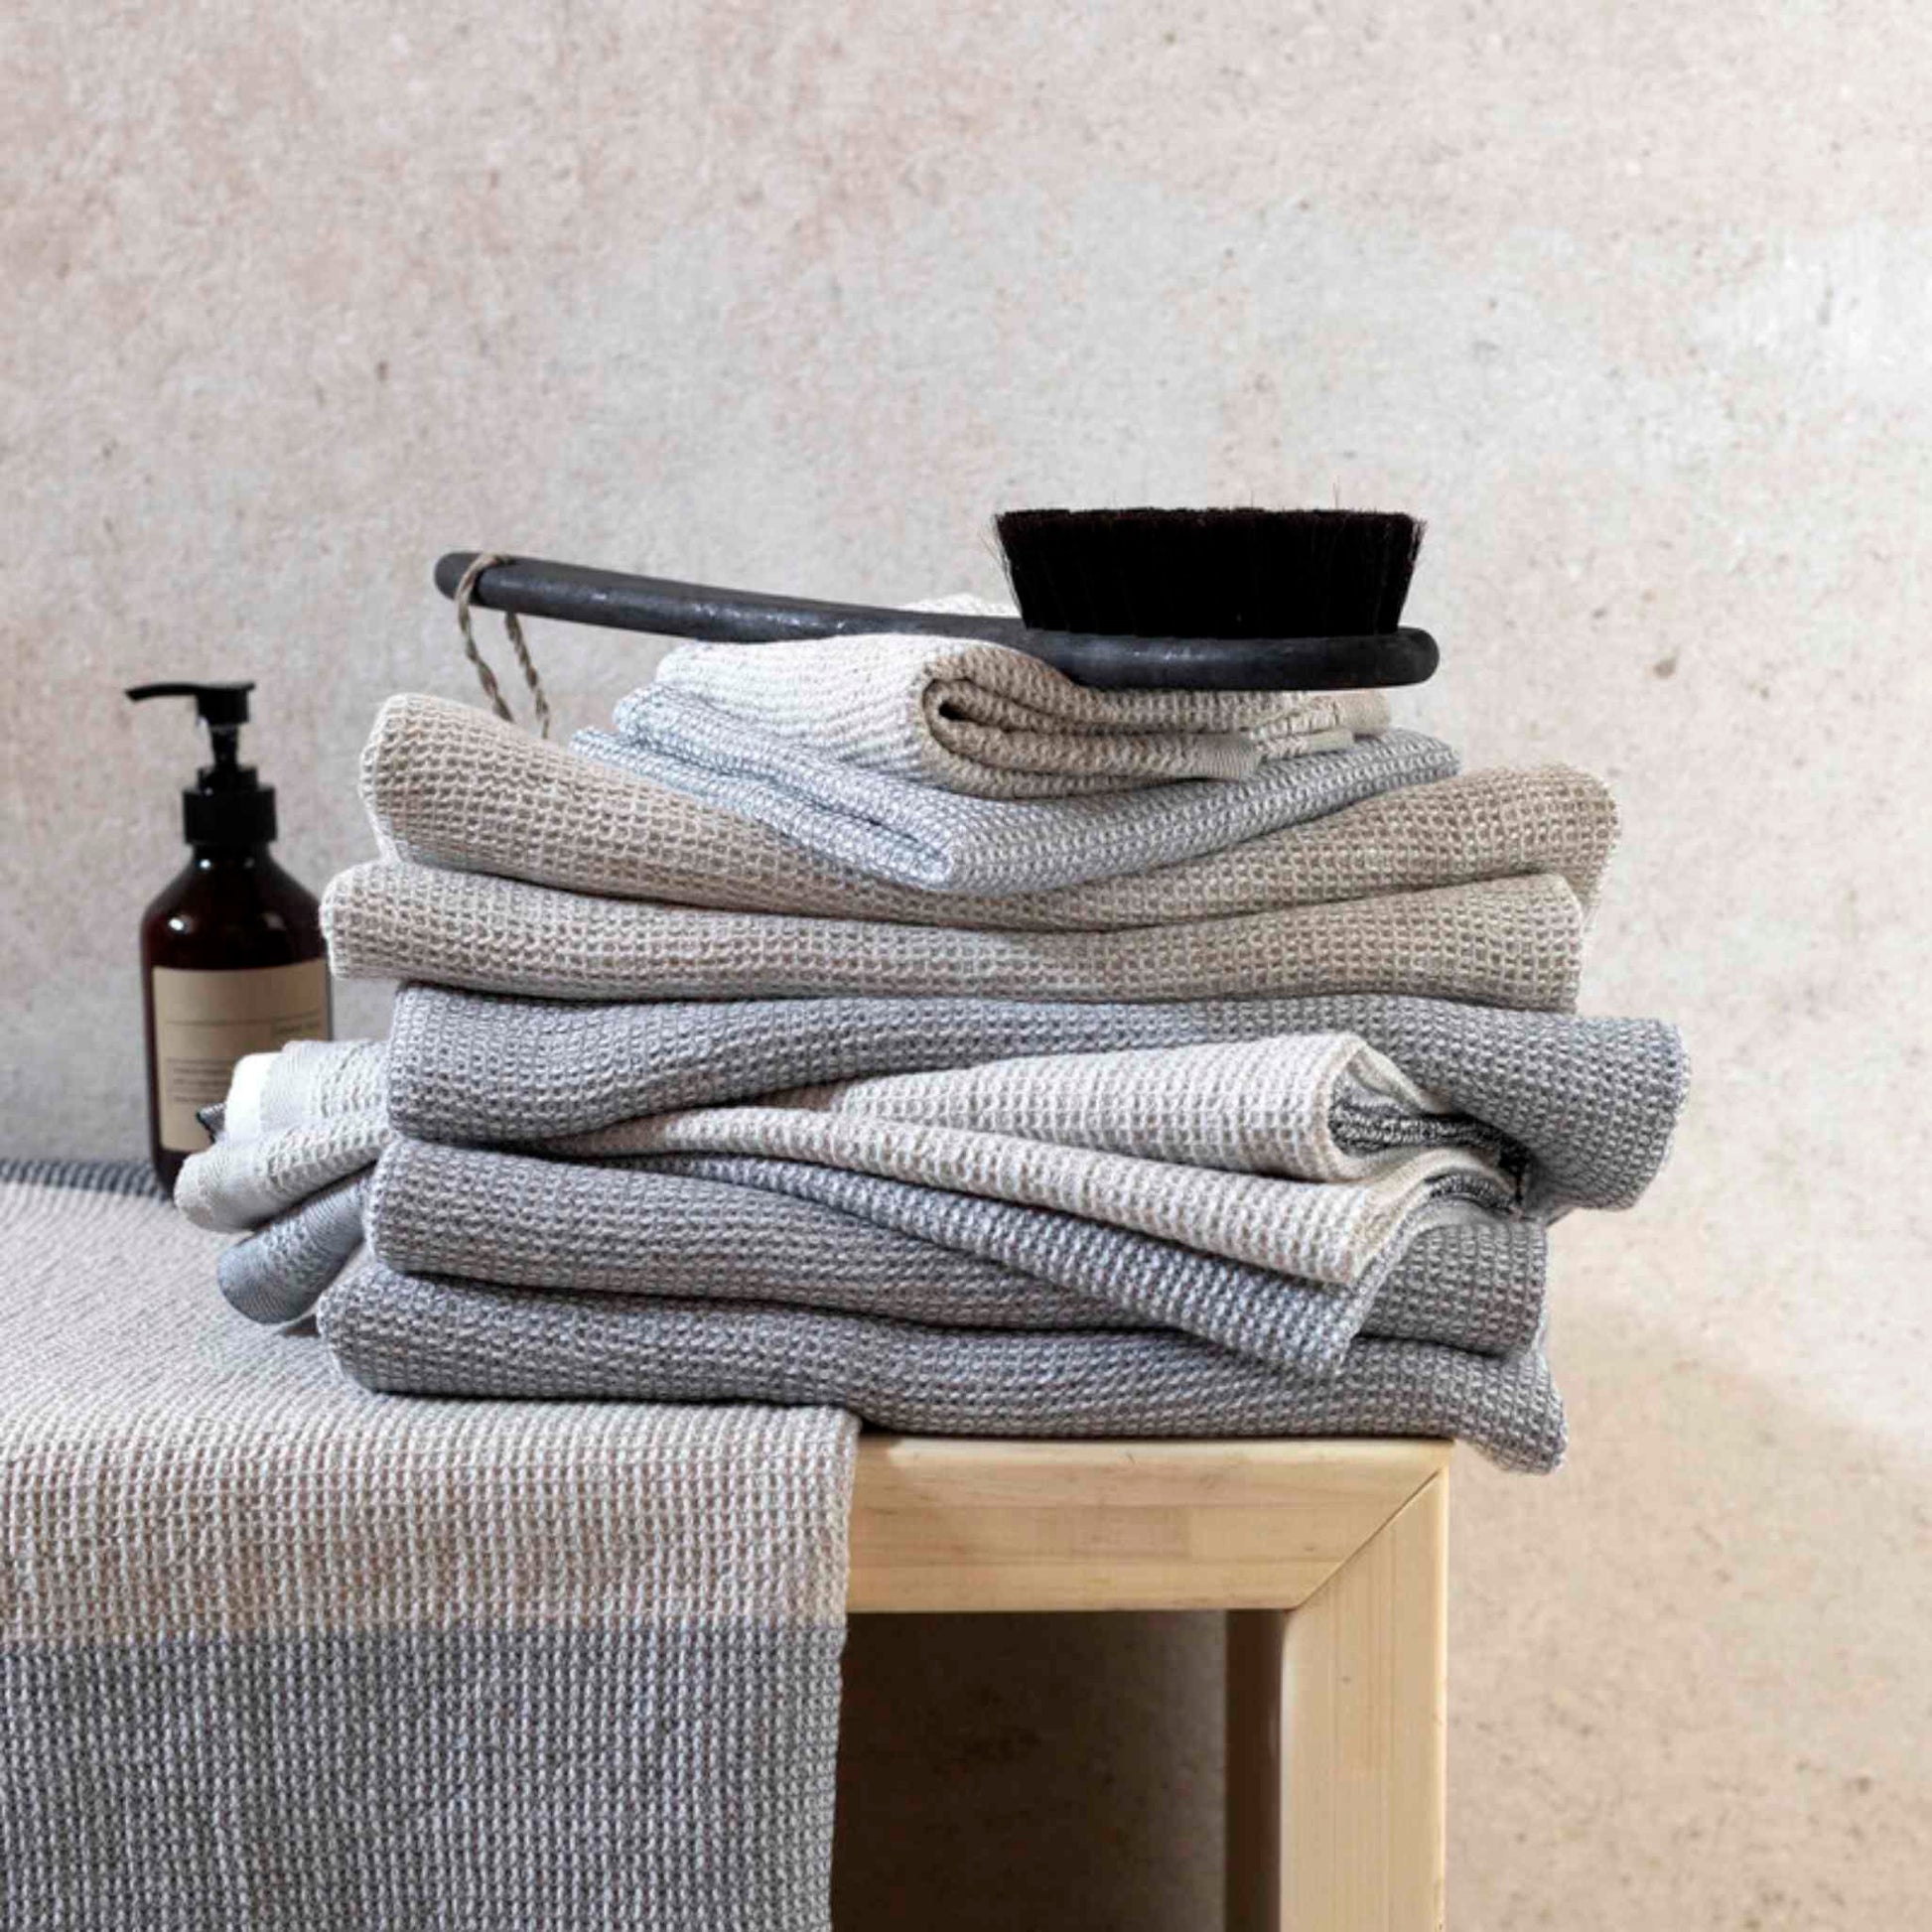 Terva Towel i White/Cinnamon fra Lapuan Kankurit (stablet på badeværelse), 169 kr.